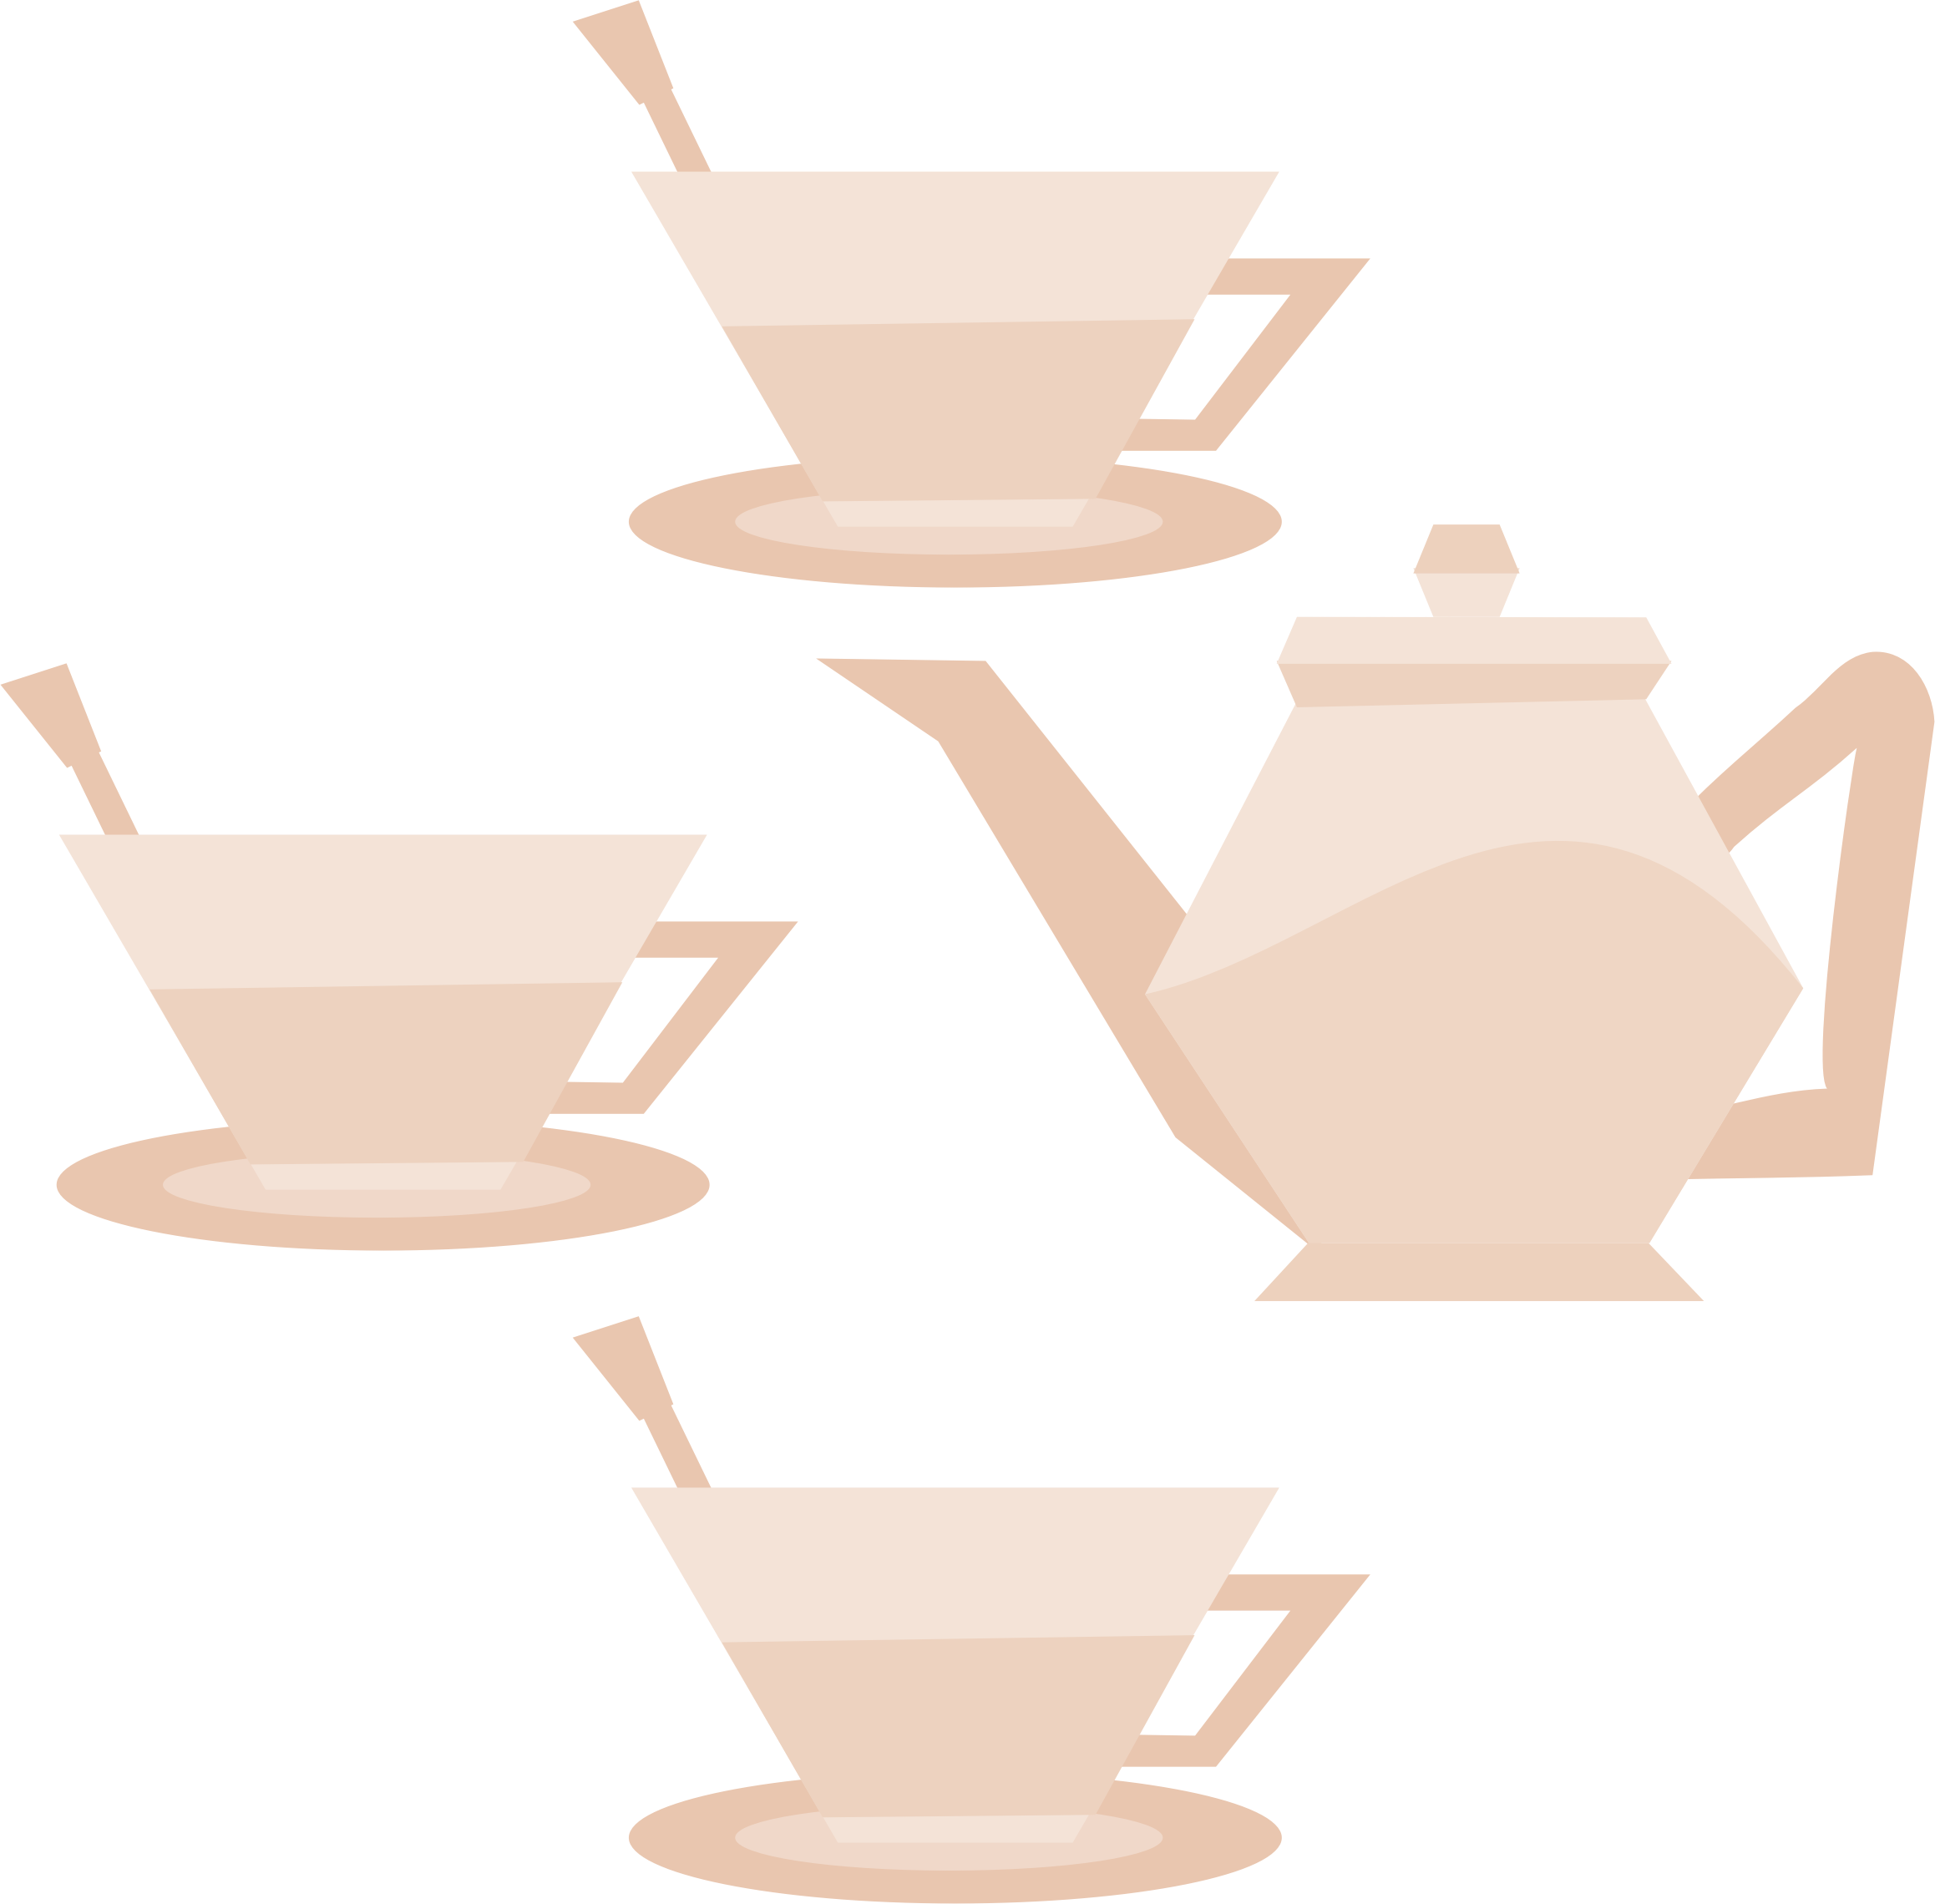 Tea tea party